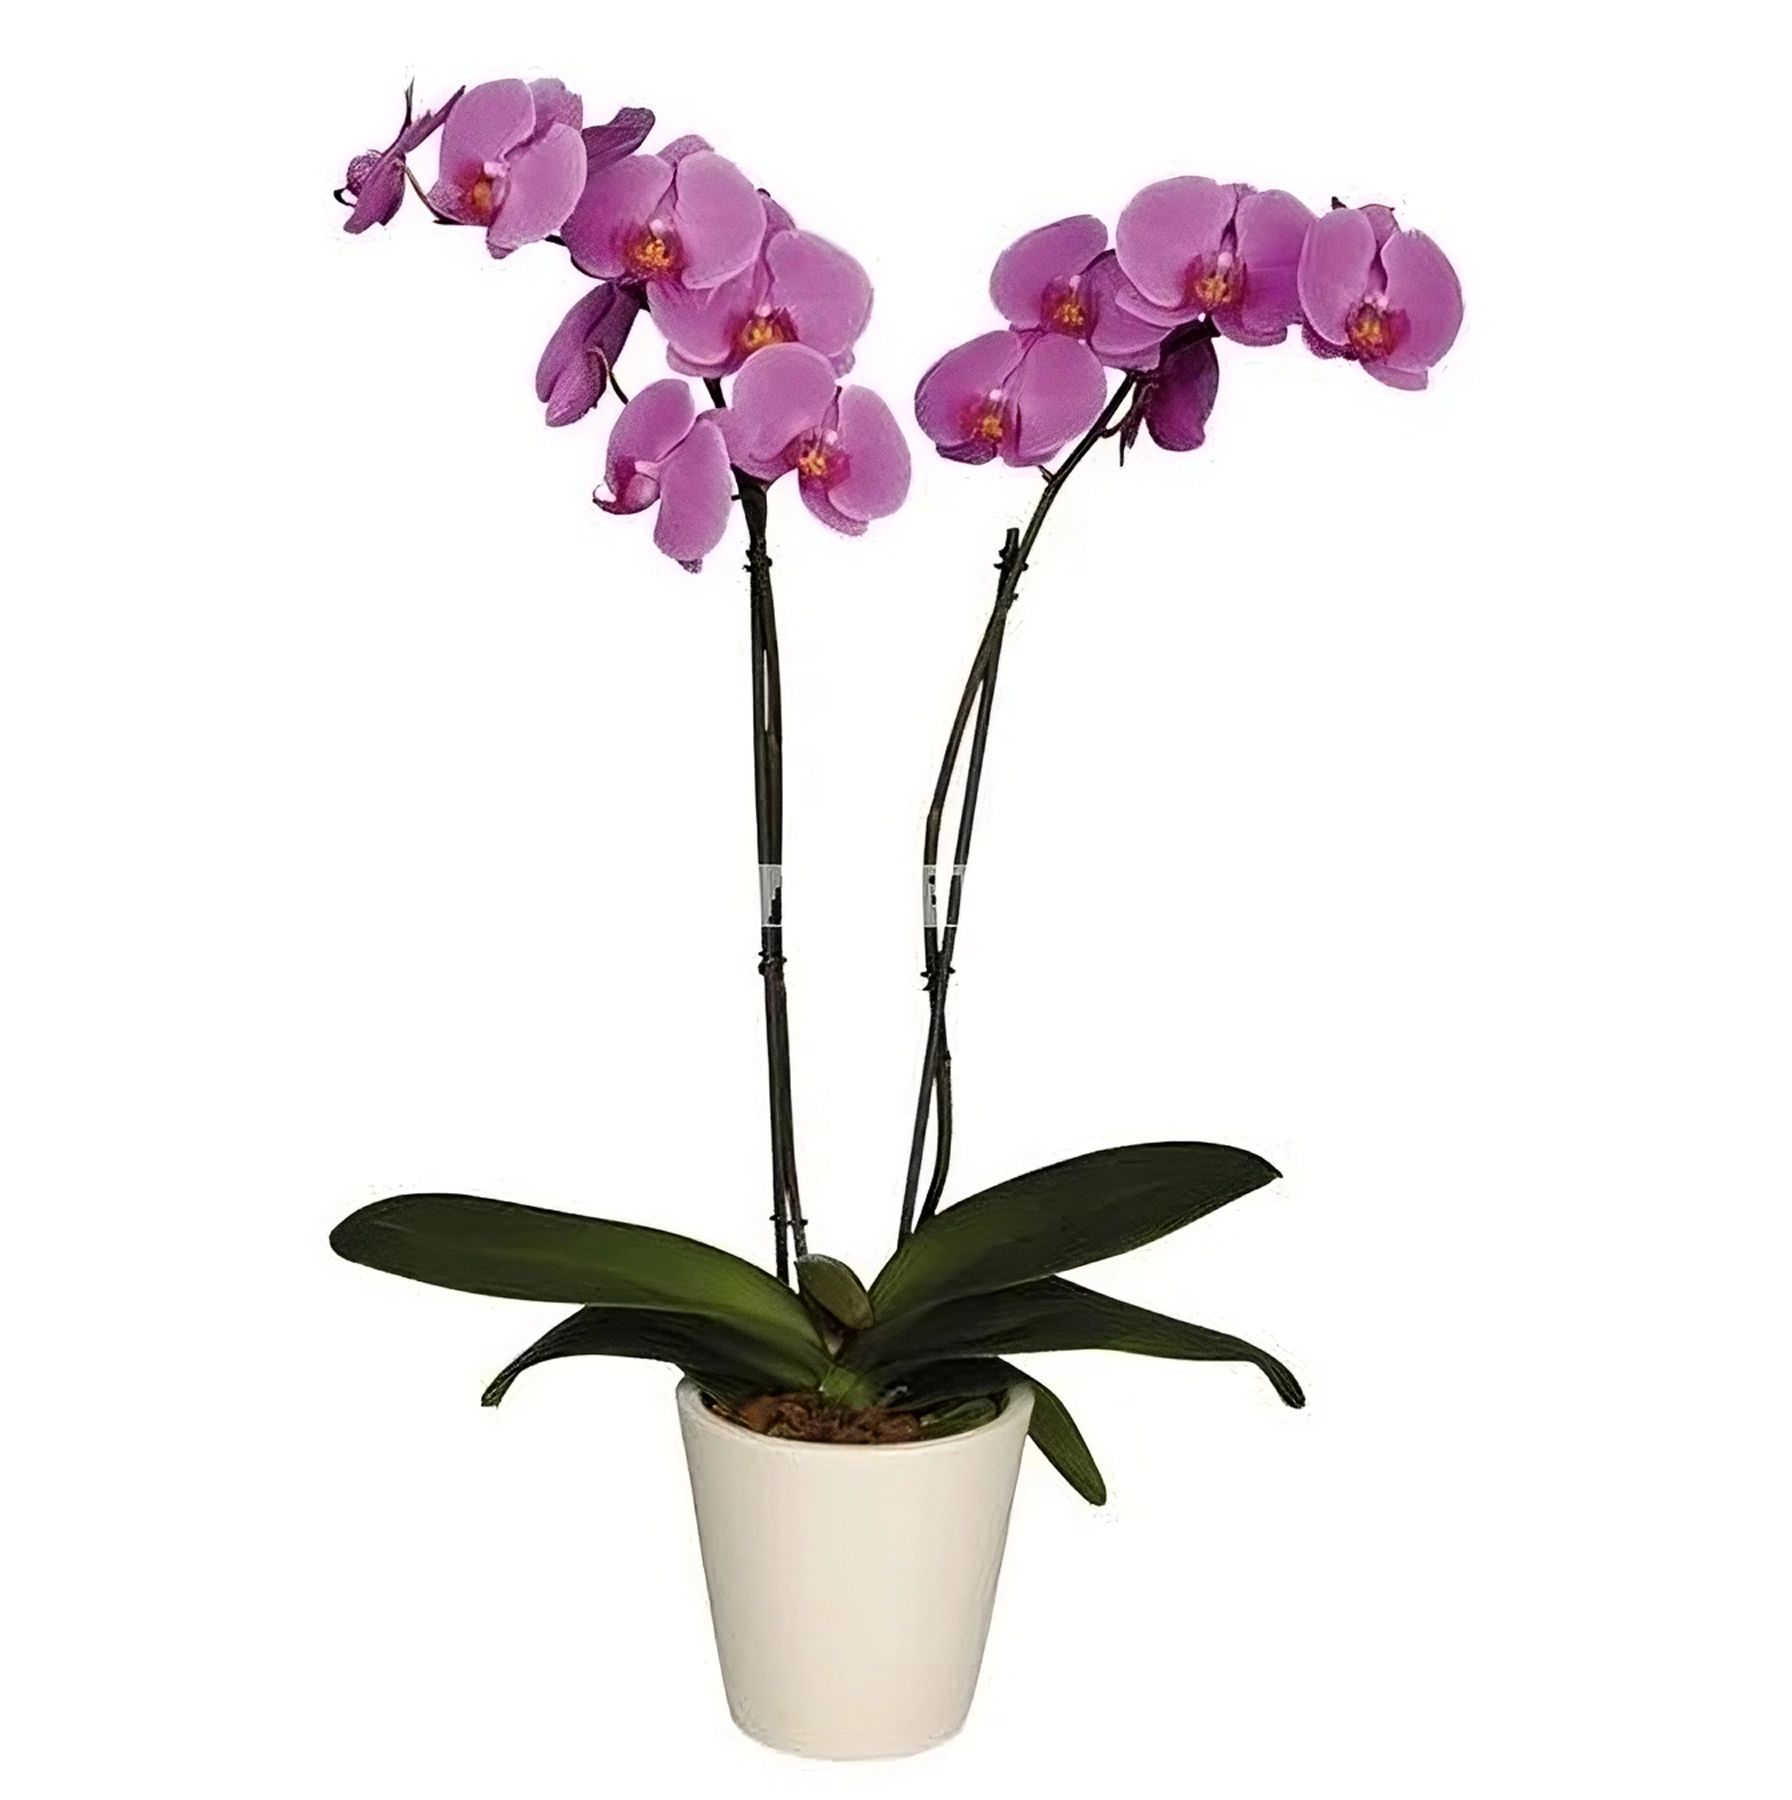  Bouquet Iilac orchid
													